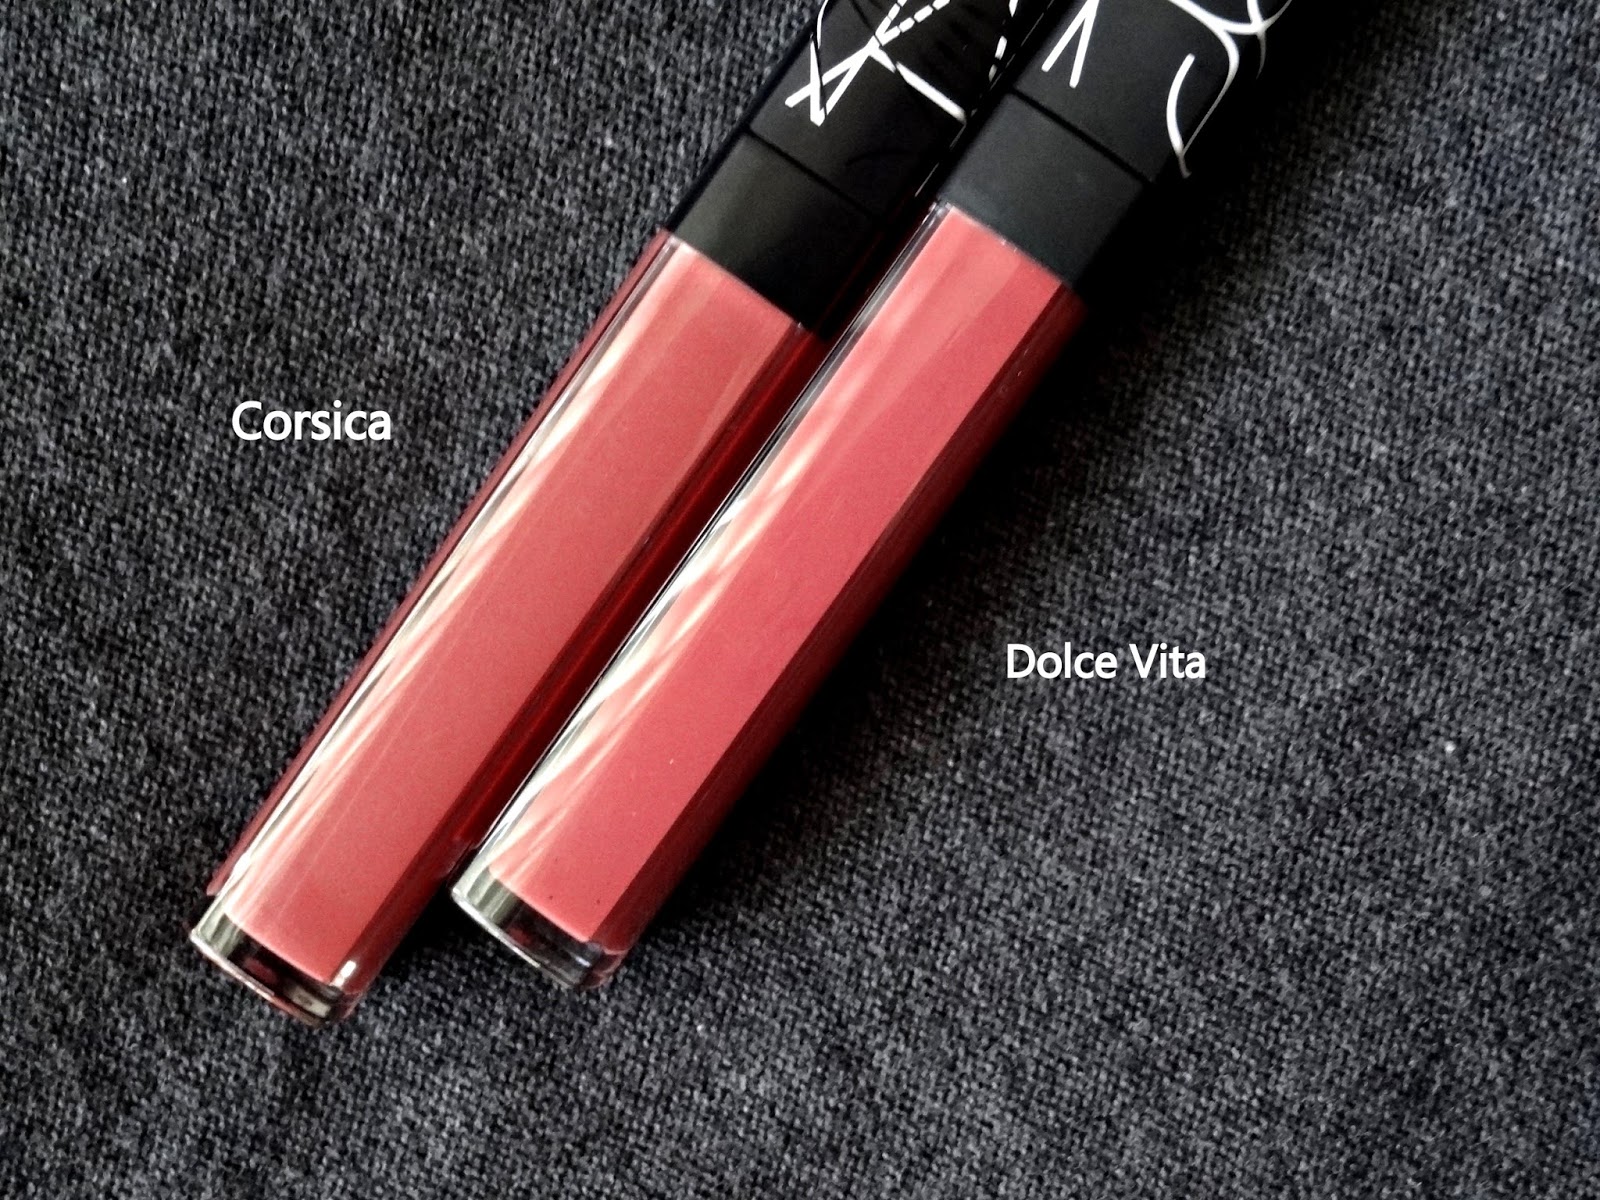 NARS Laced with Edge Holiday Collection Corsica Lip Gloss vs Dolce Vita Lipgloss COmparison